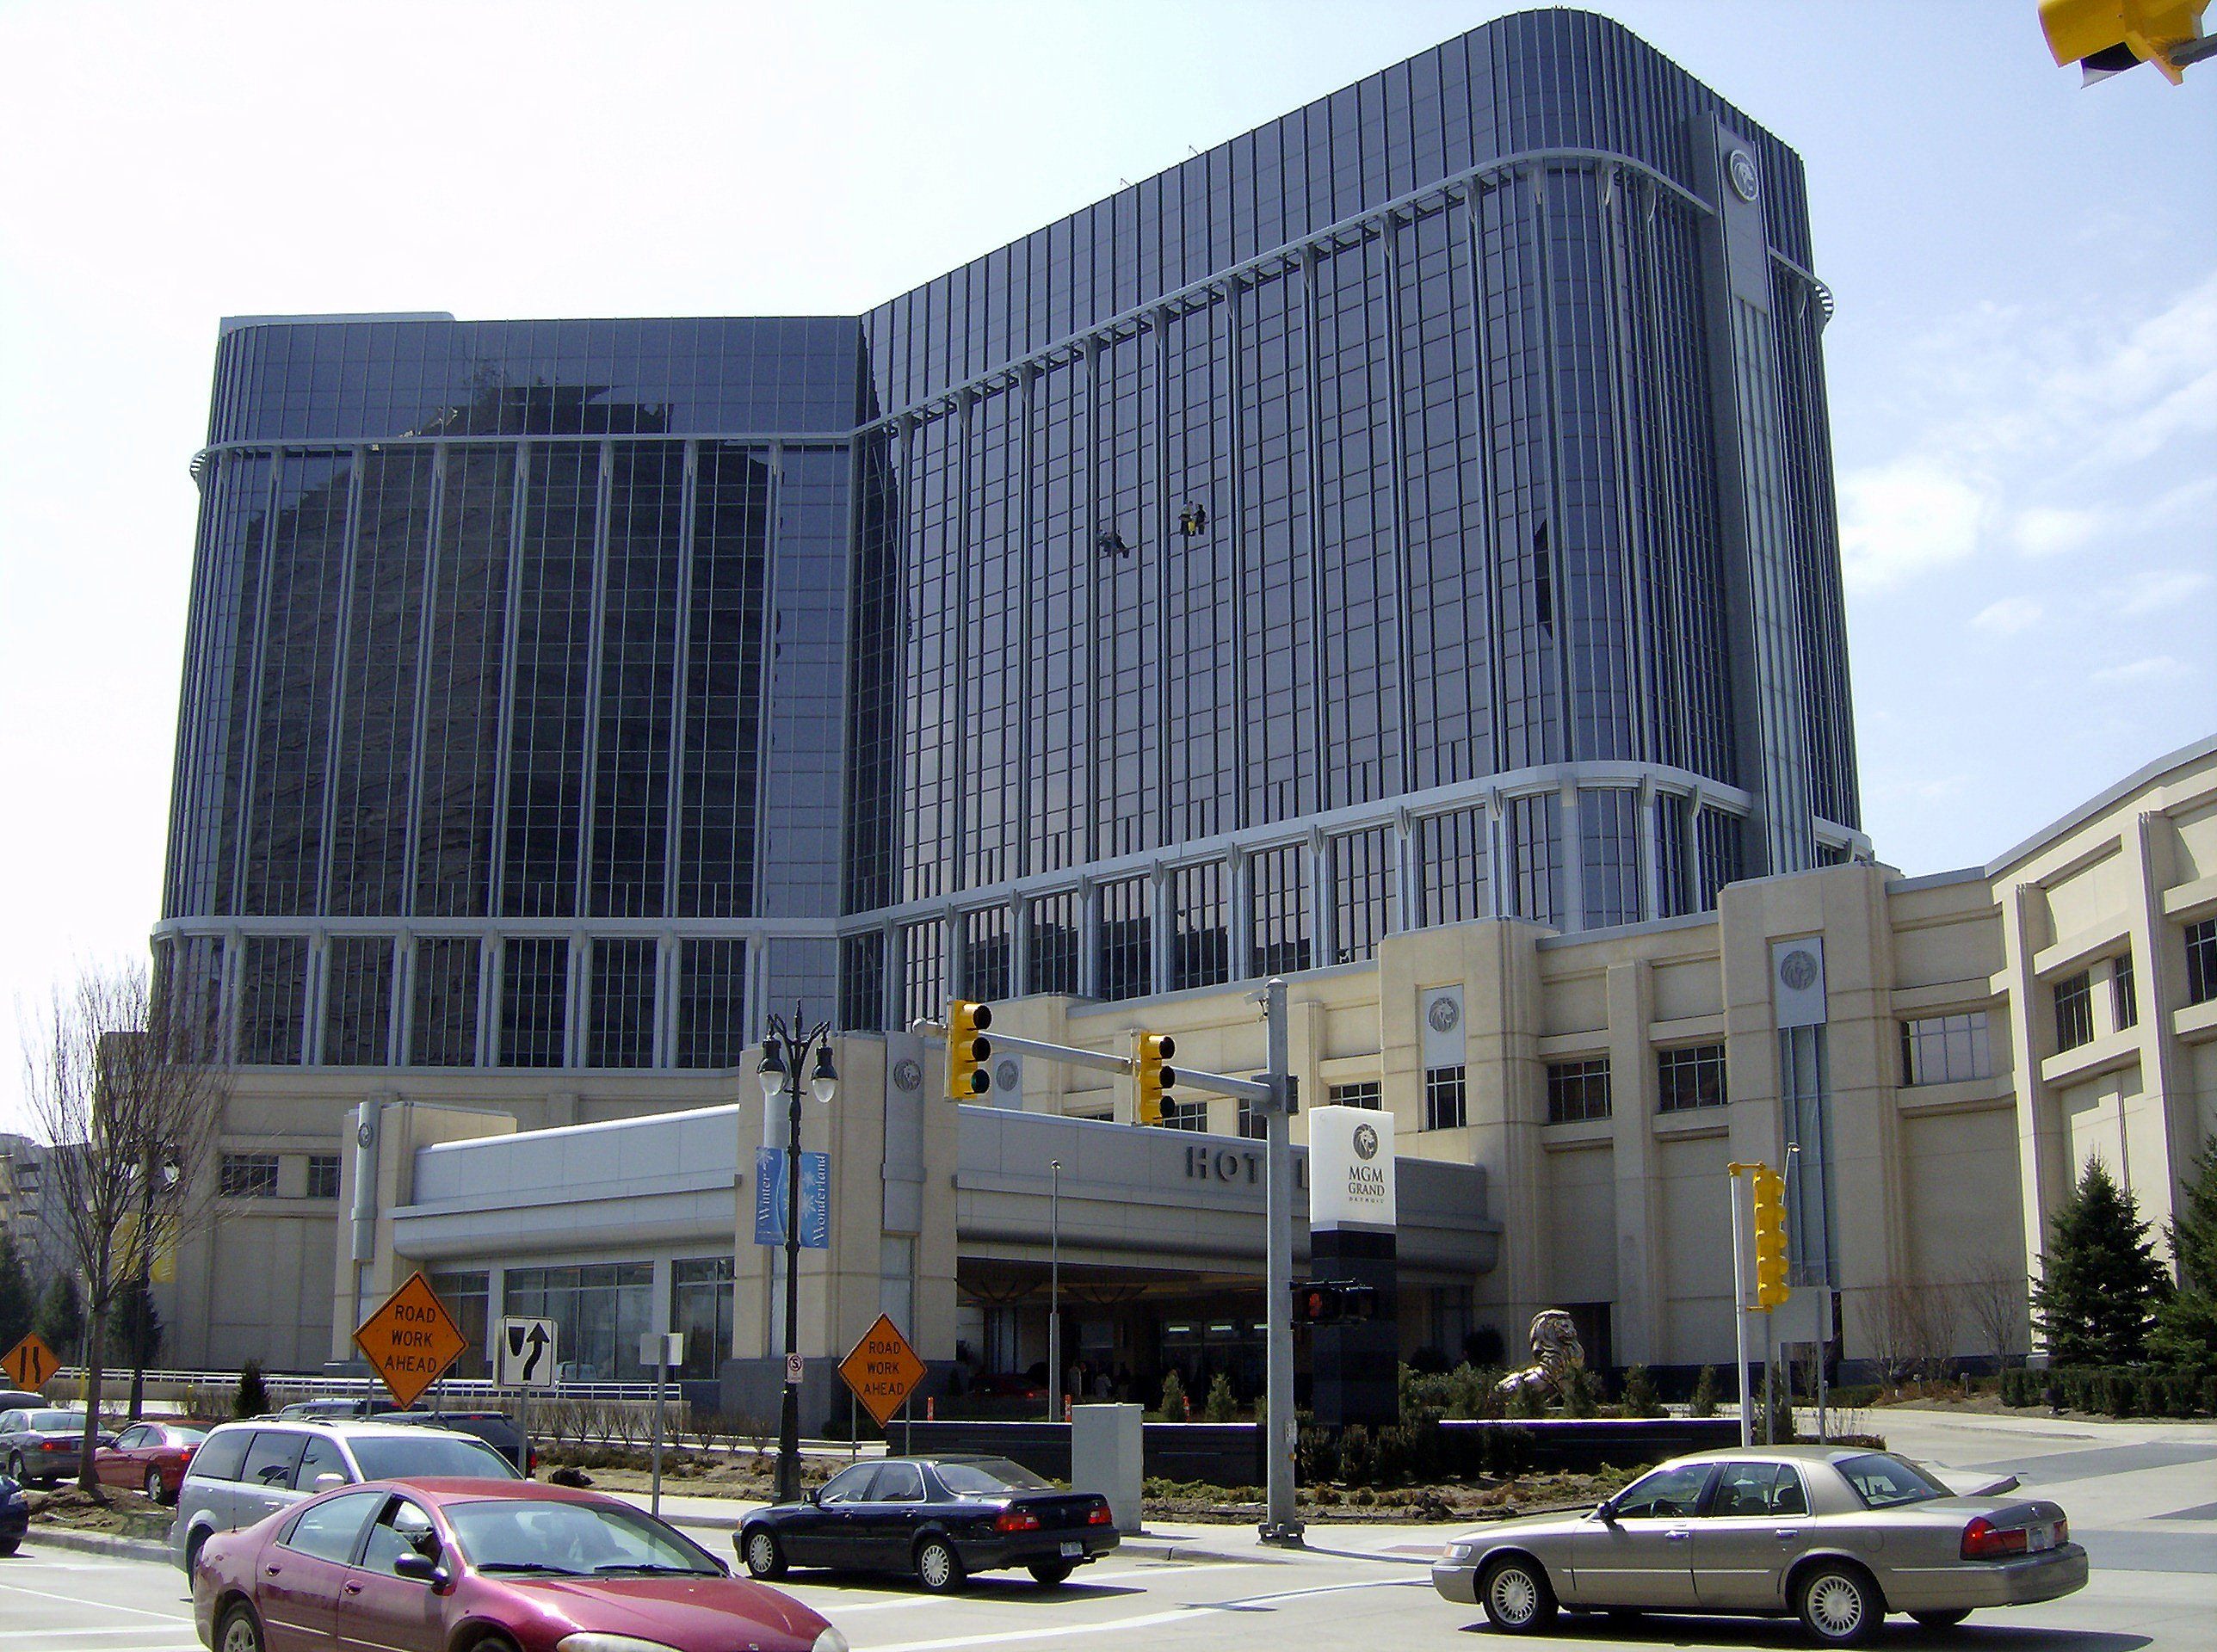 Mgm Grand Casino Detroit